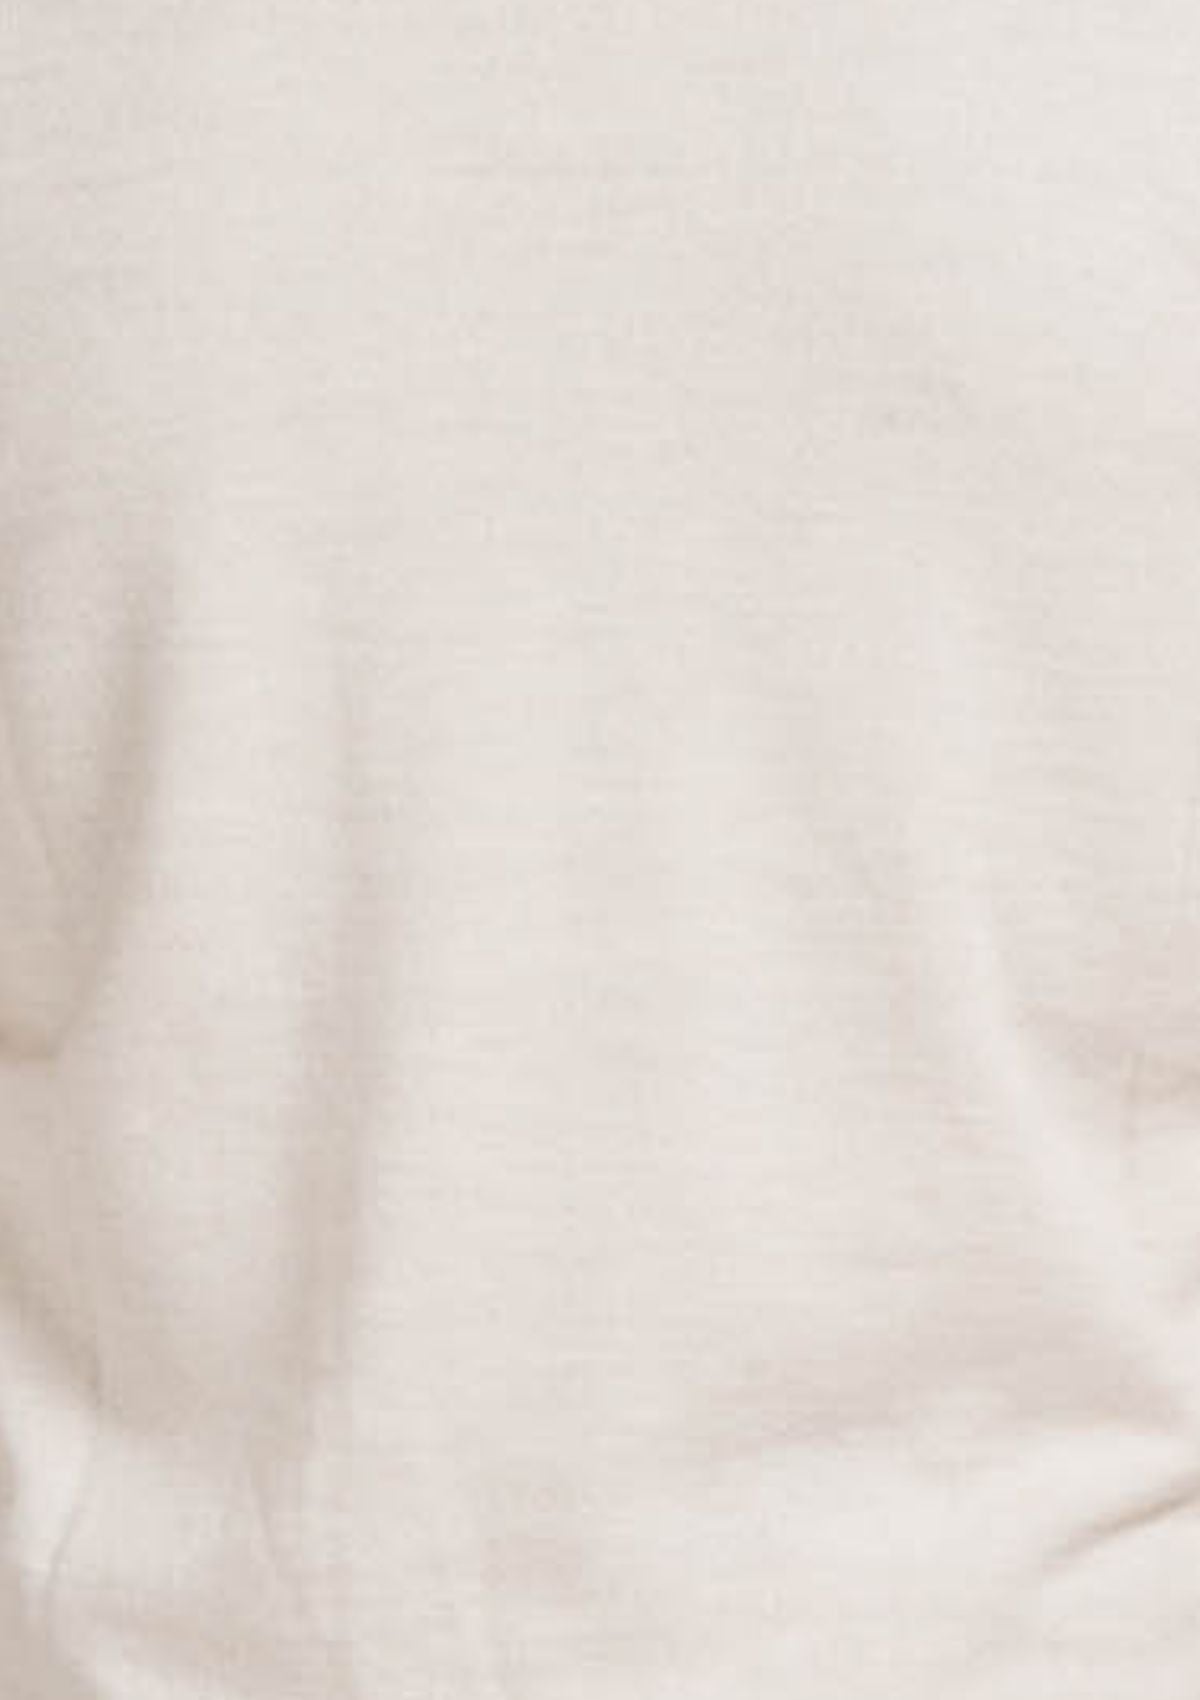 maglione beige